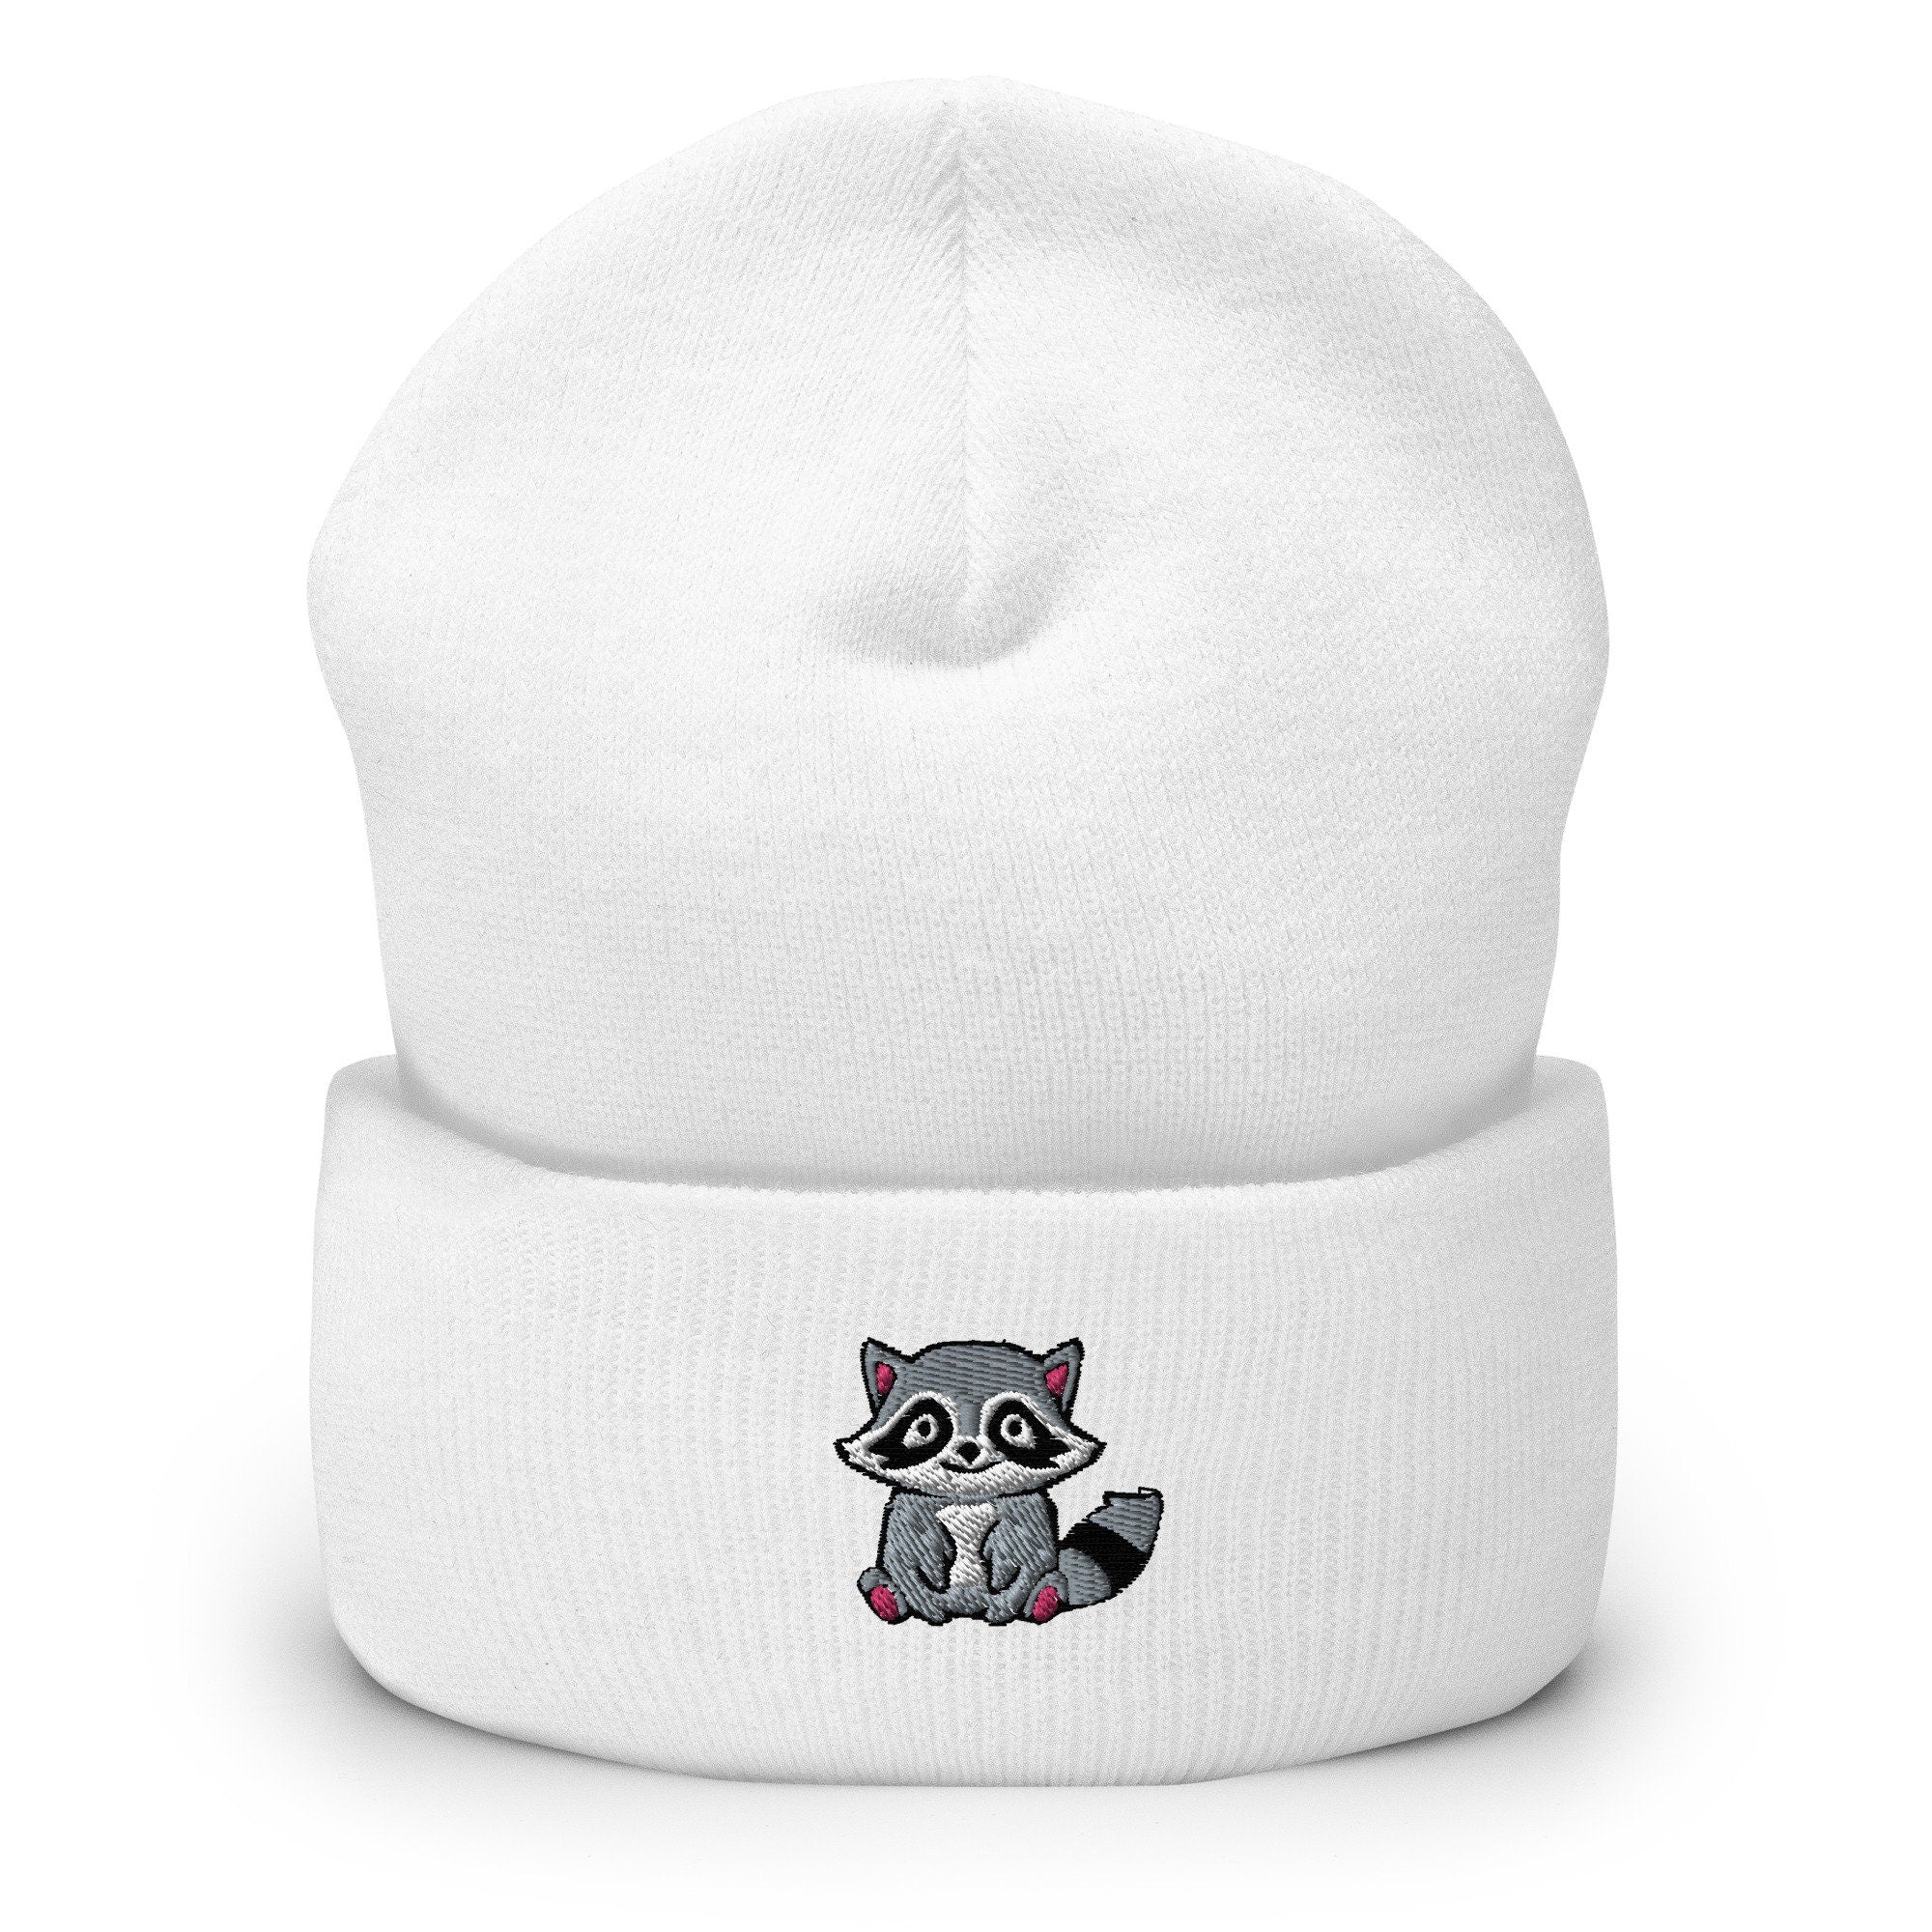 Trash Panda Raccoon Embroidered Beanie, Handmade Cuffed Knit Unisex Slouchy Adult Winter Hat Cap Gift